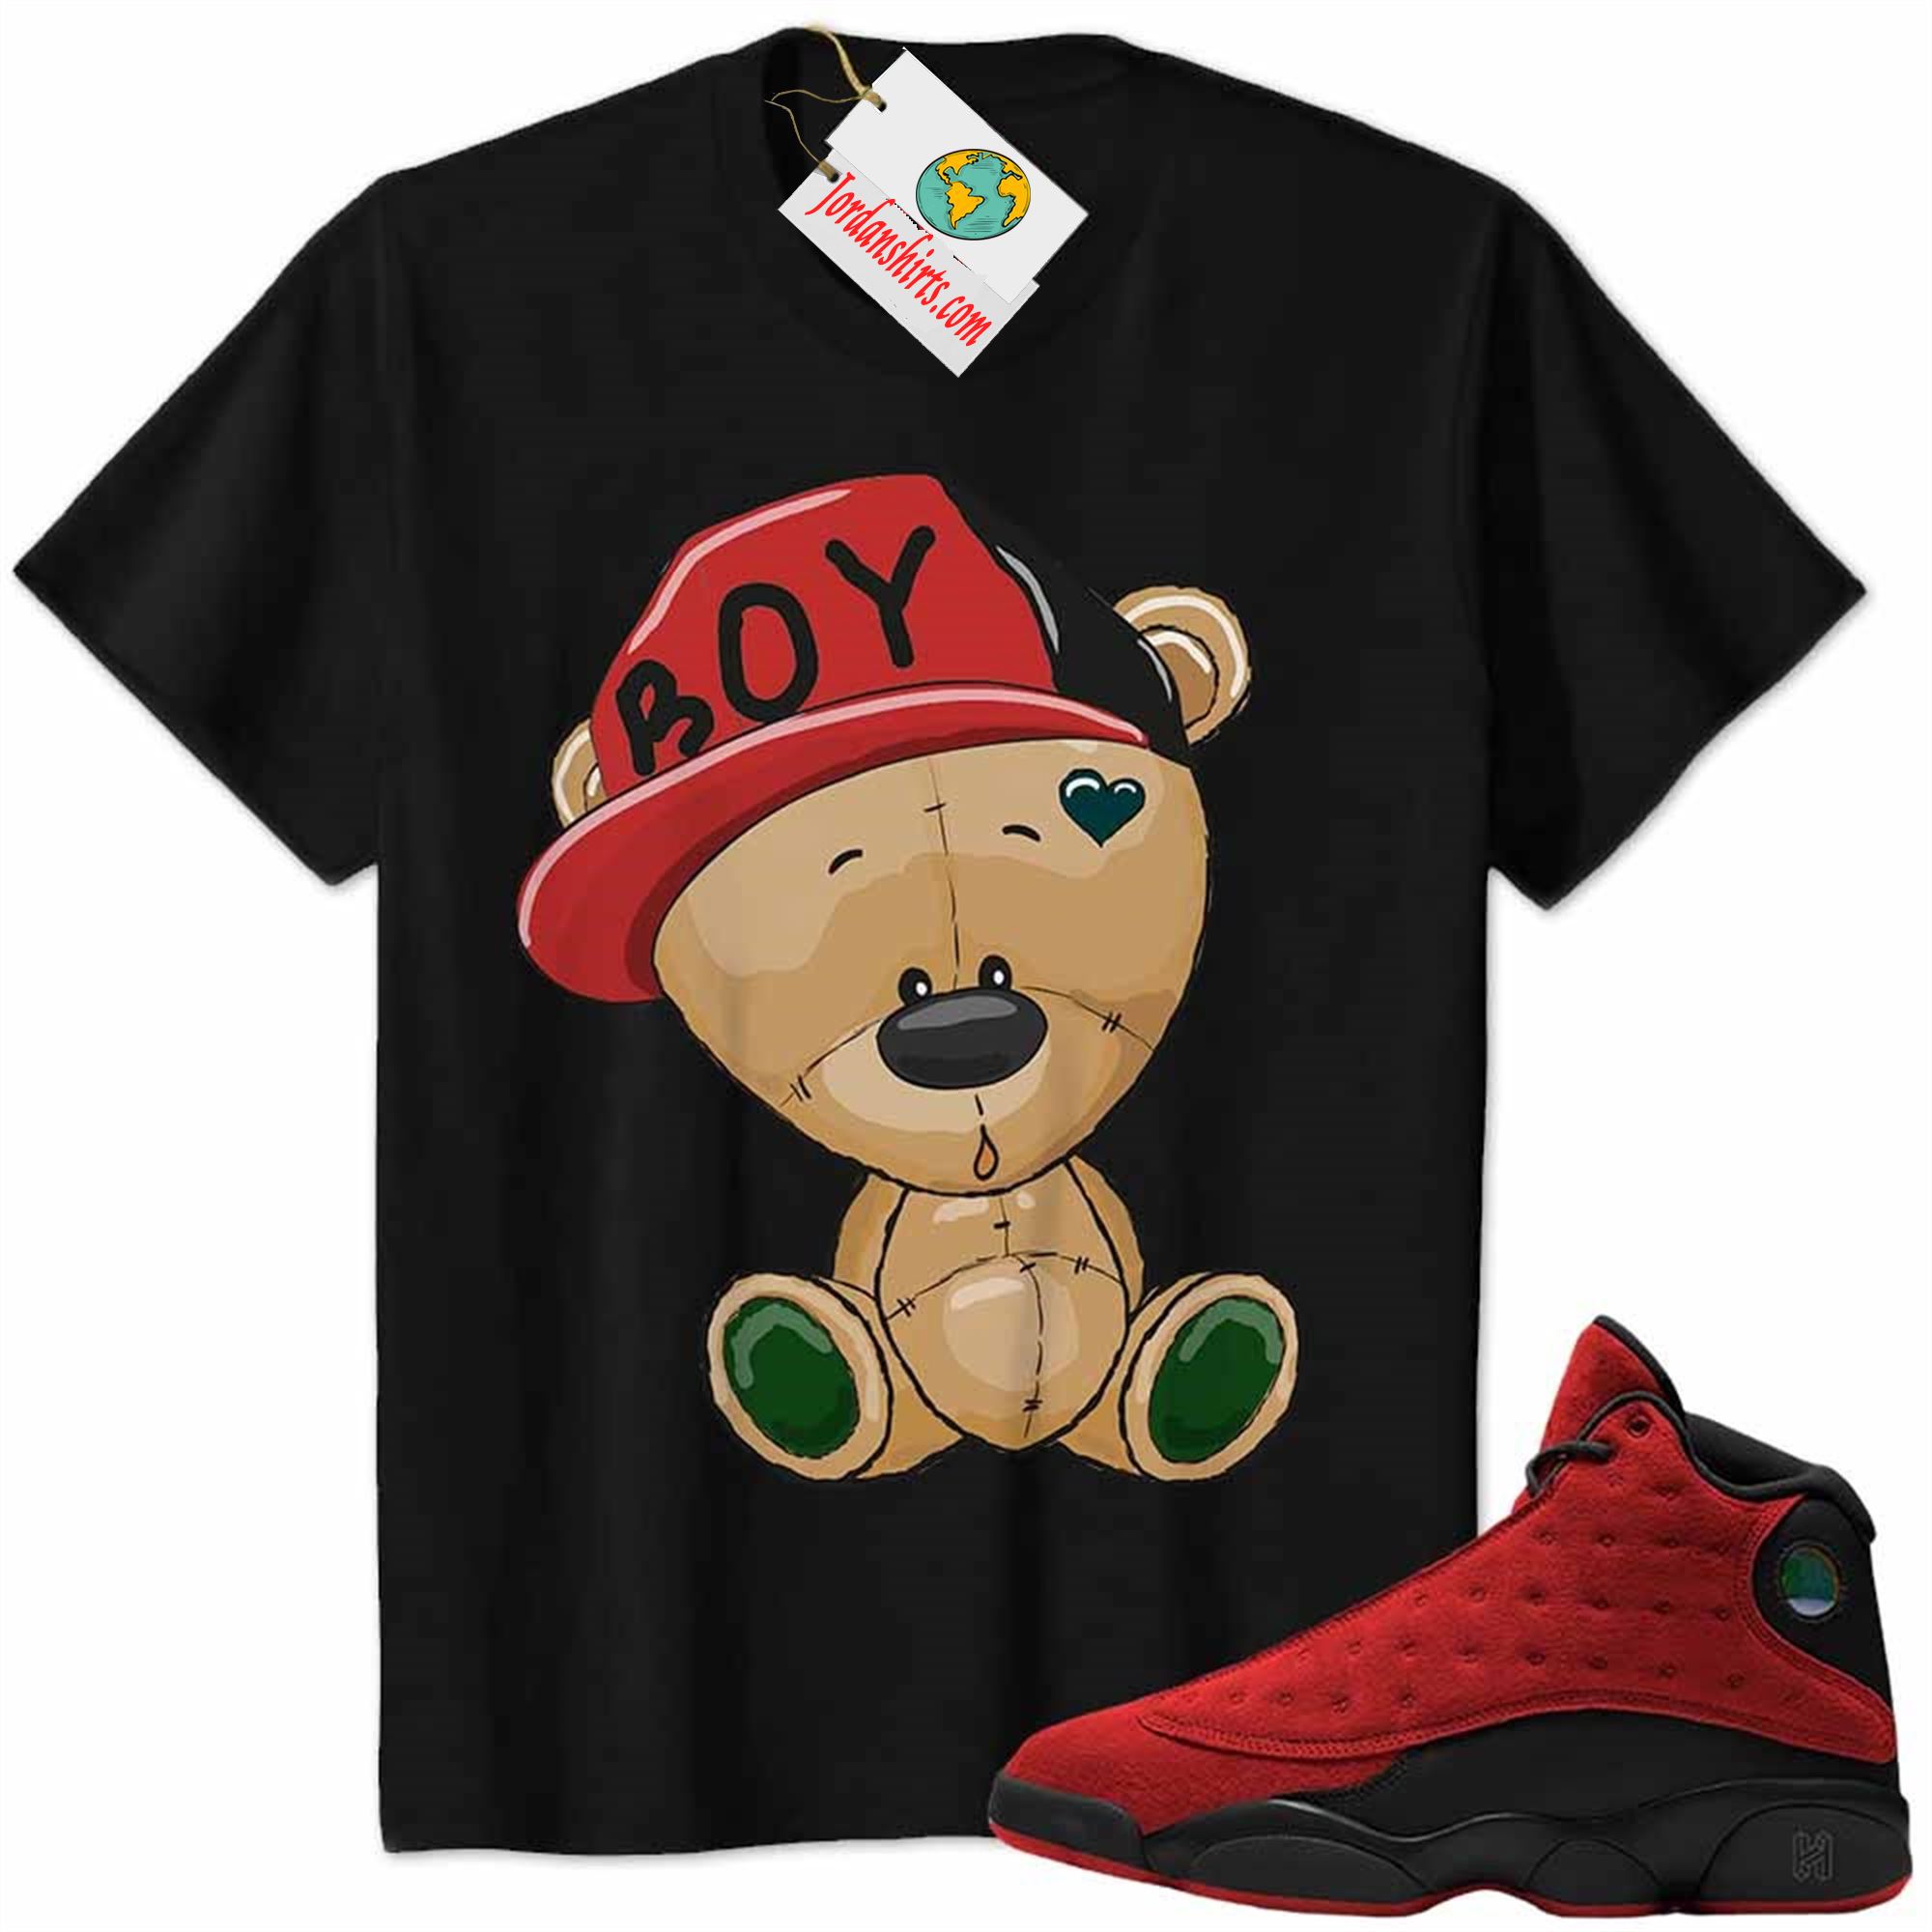 Jordan 13 Shirt, Jordan 13 Reverse Bred Shirt Cute Baby Teddy Bear Black Size Up To 5xl